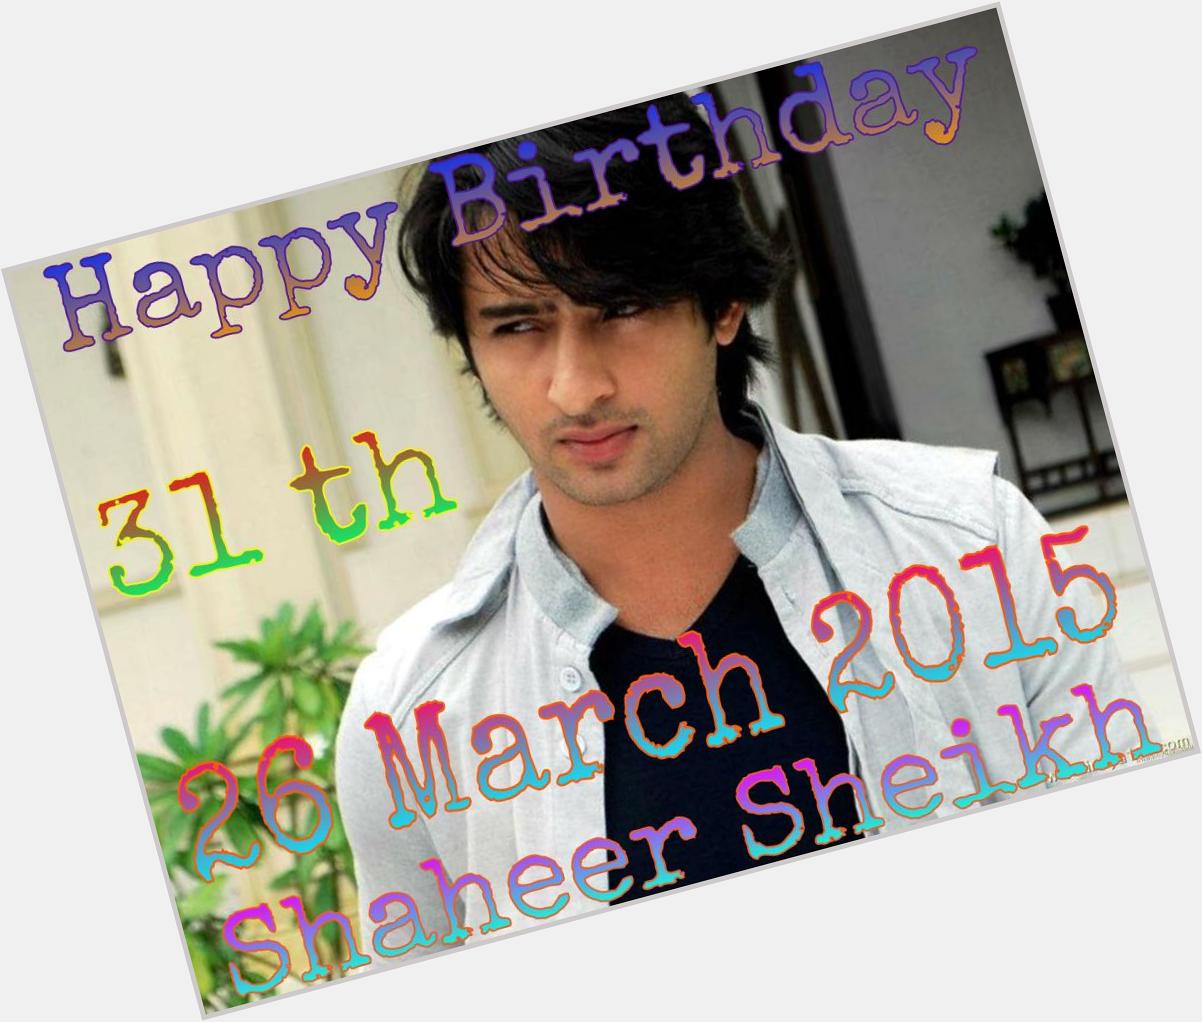 Happy birthday for you
Shaheer Sheikh 